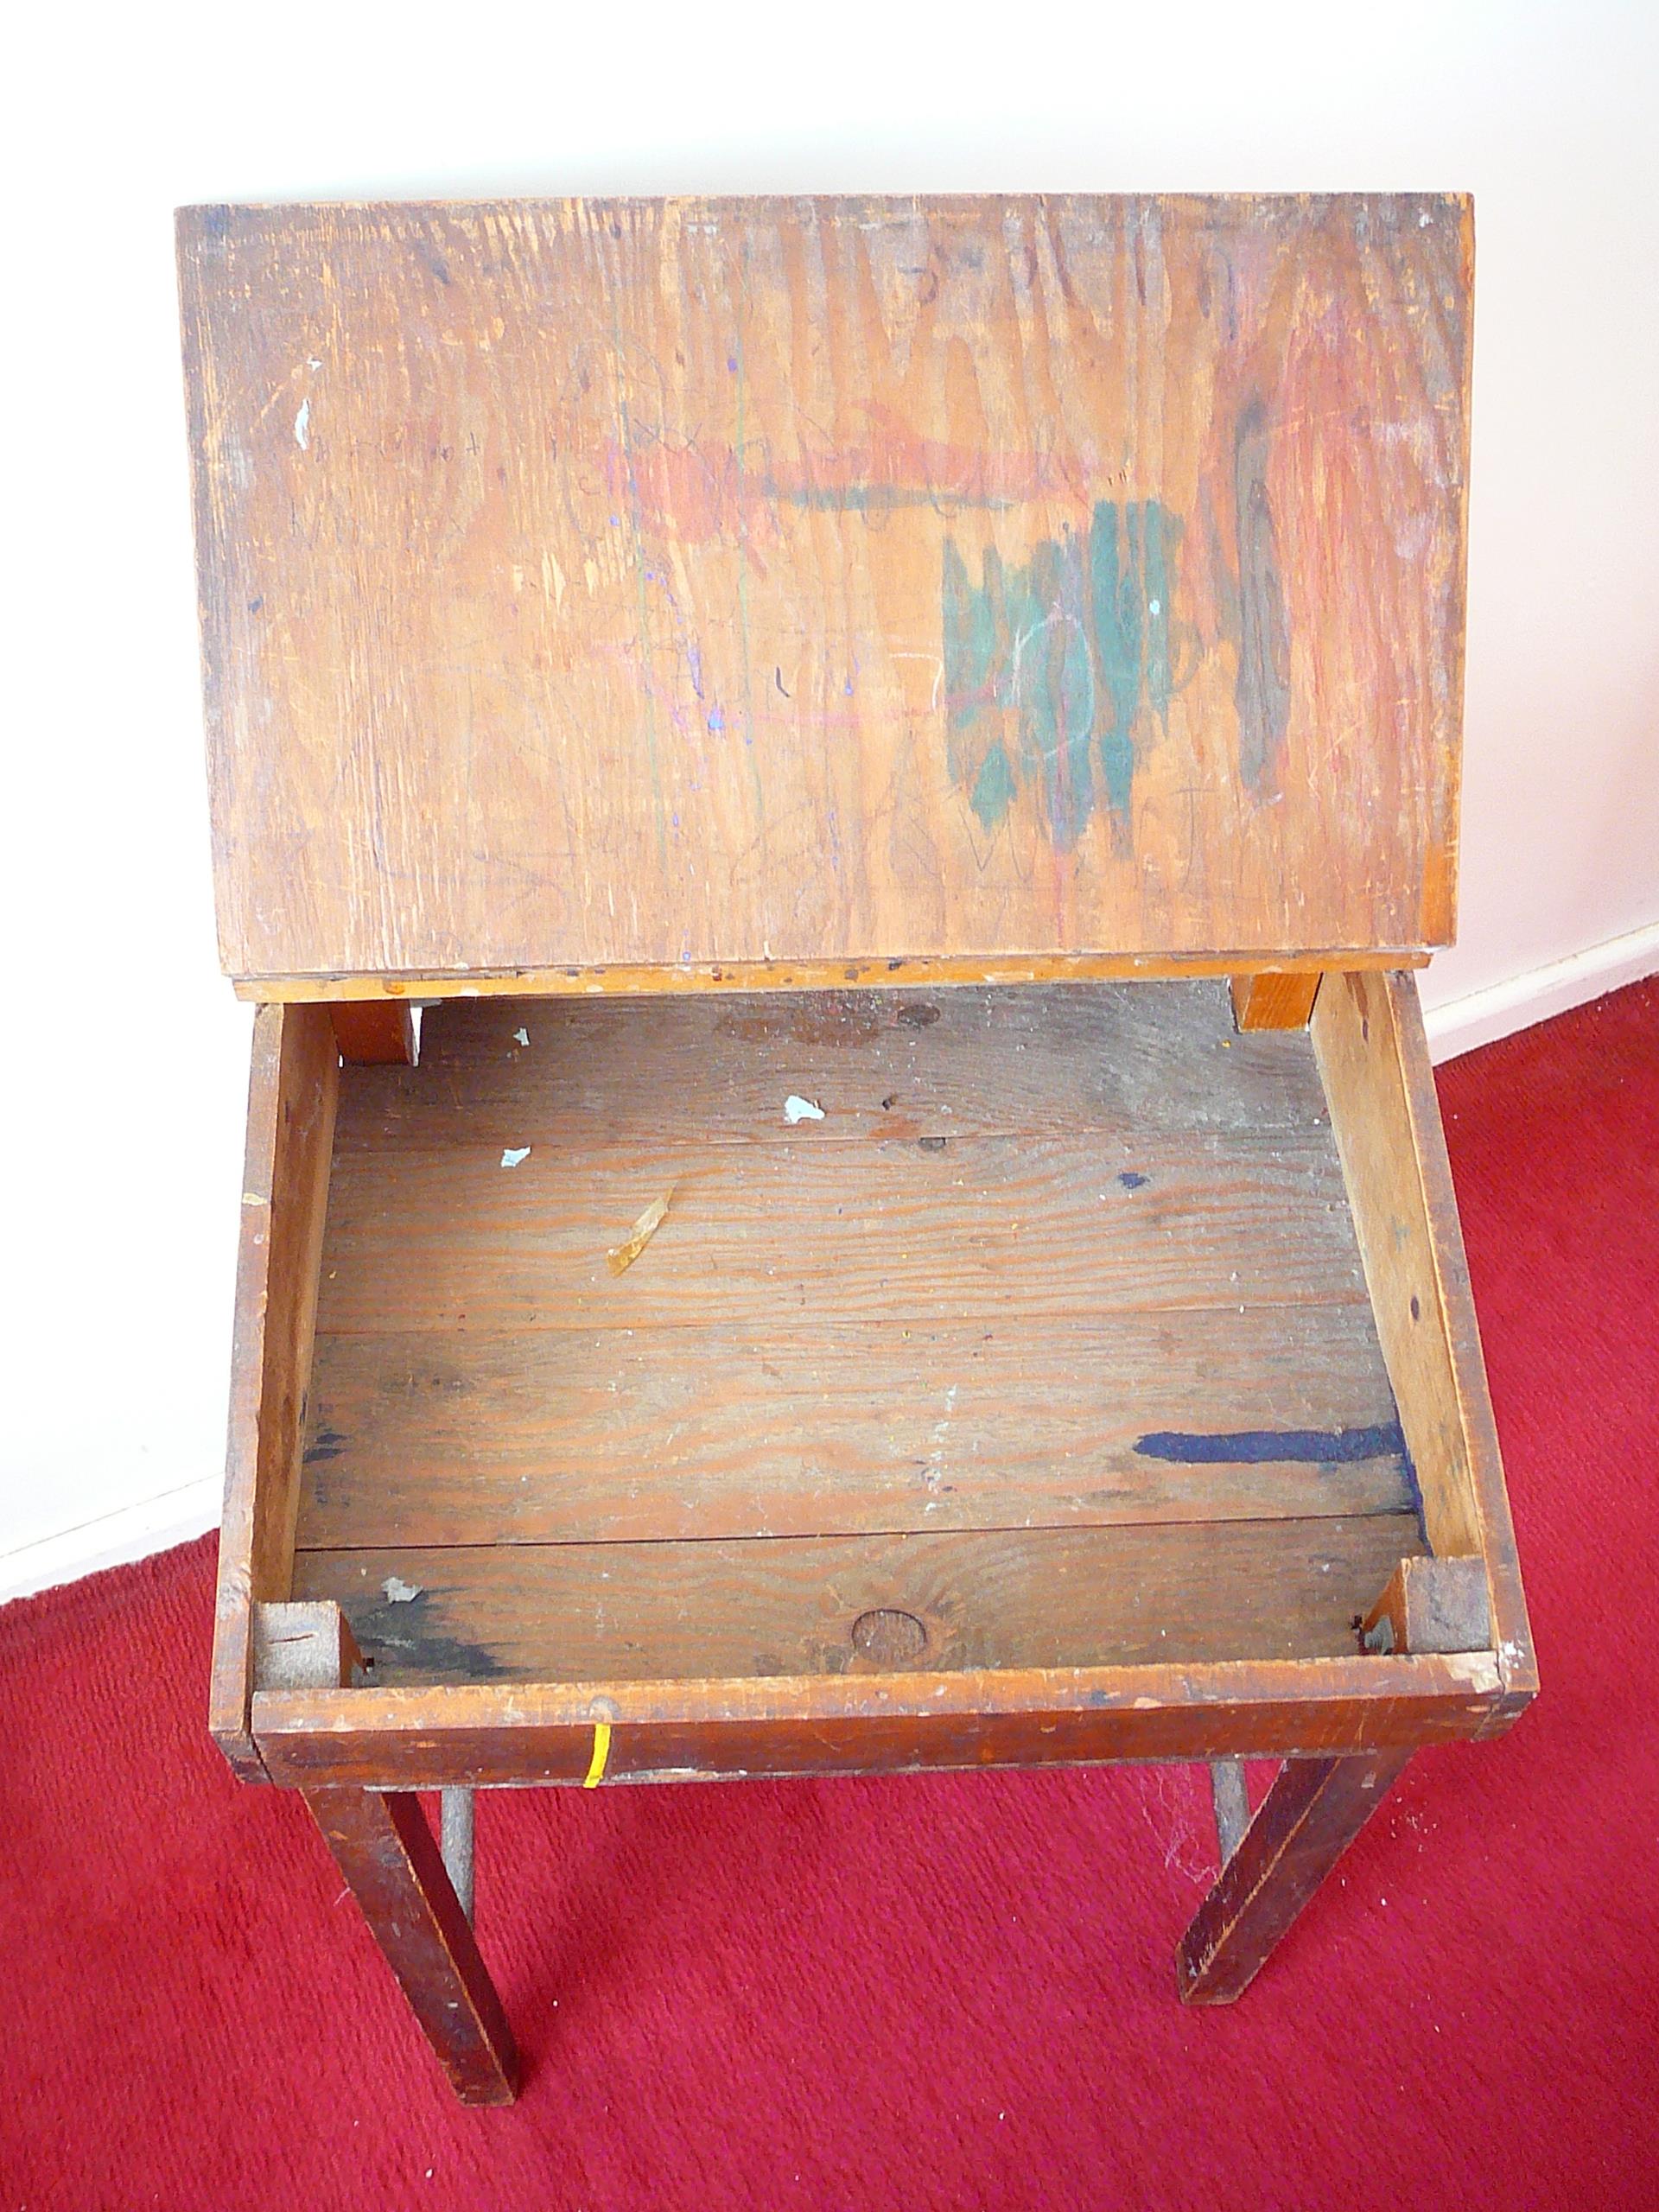 Child's Wooden Desk - Image 3 of 3